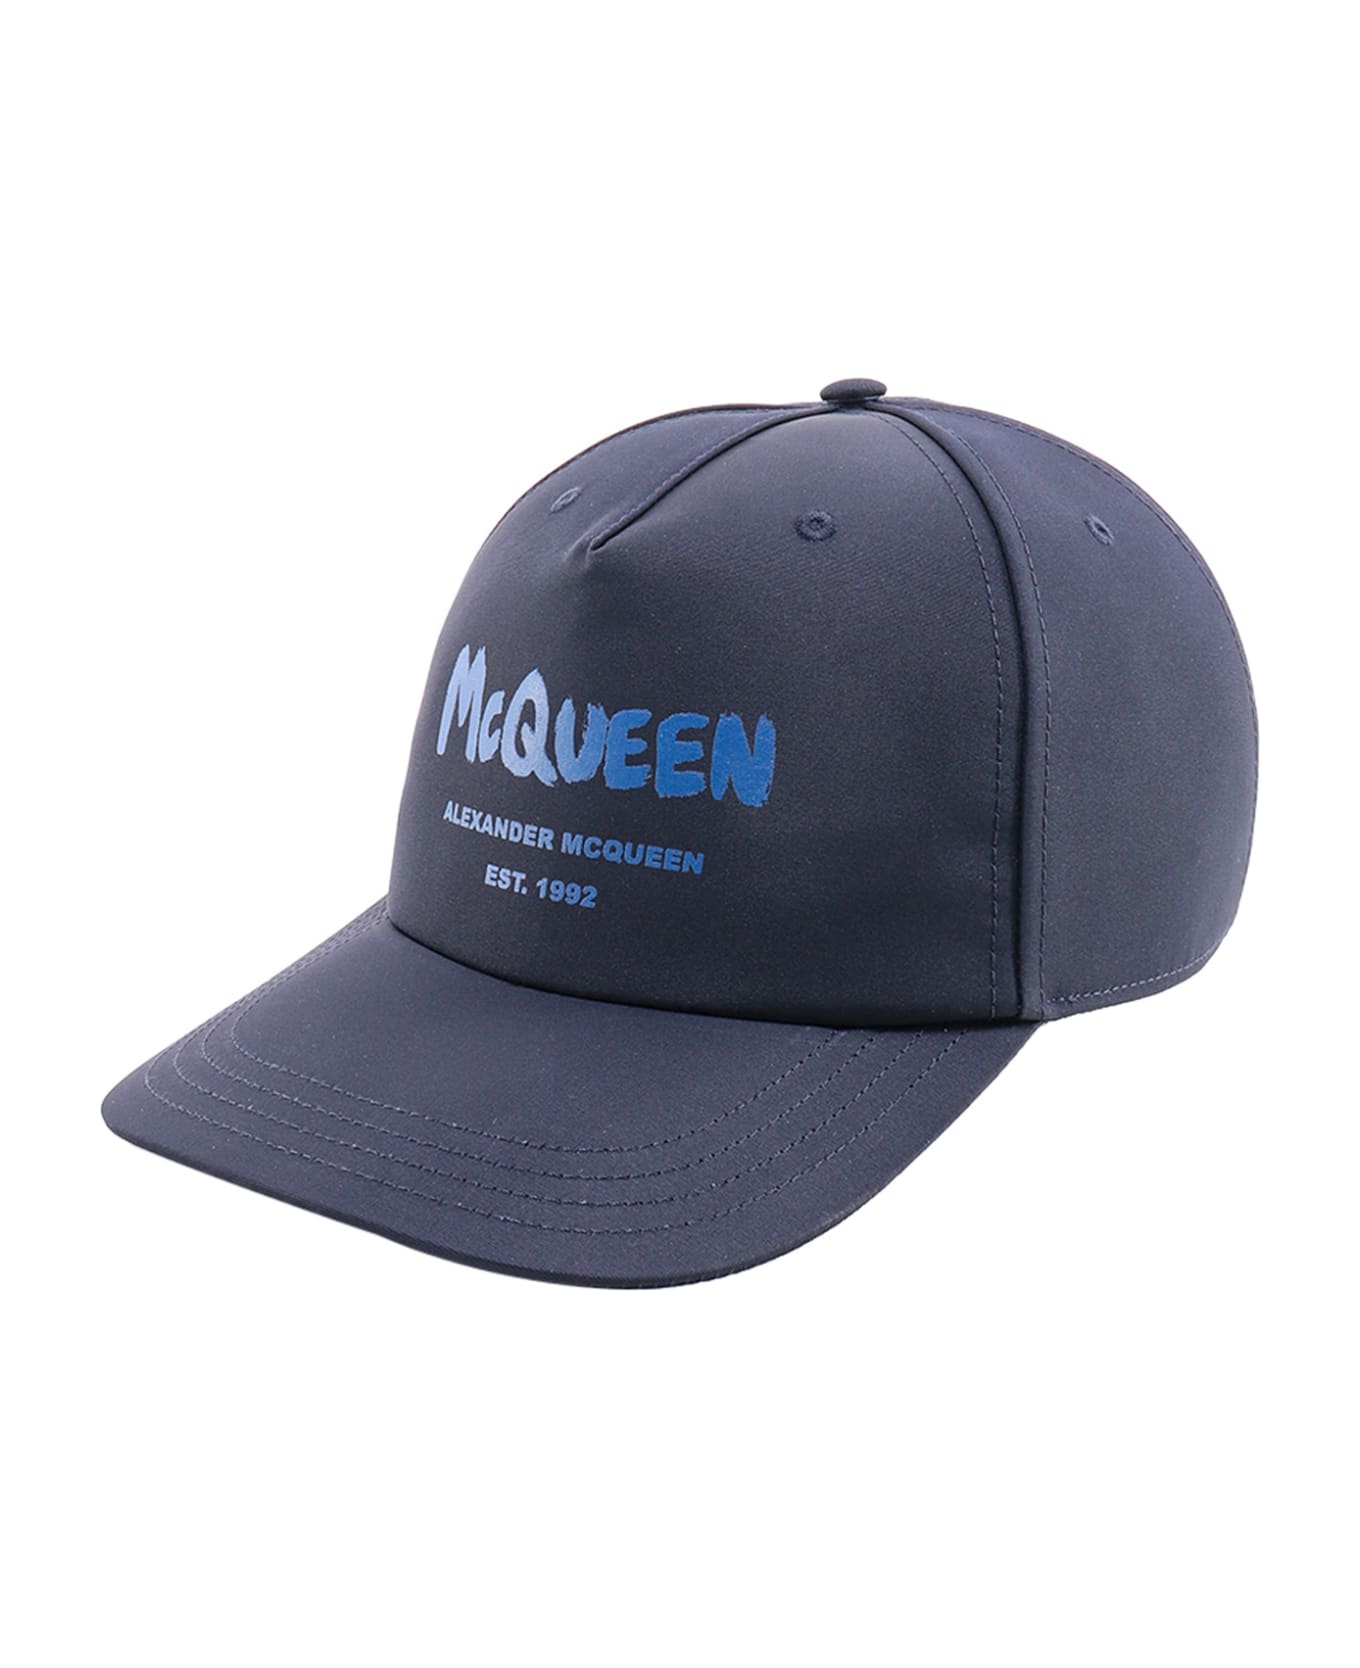 Alexander McQueen Graffiti Baseball Hat - Blue 帽子